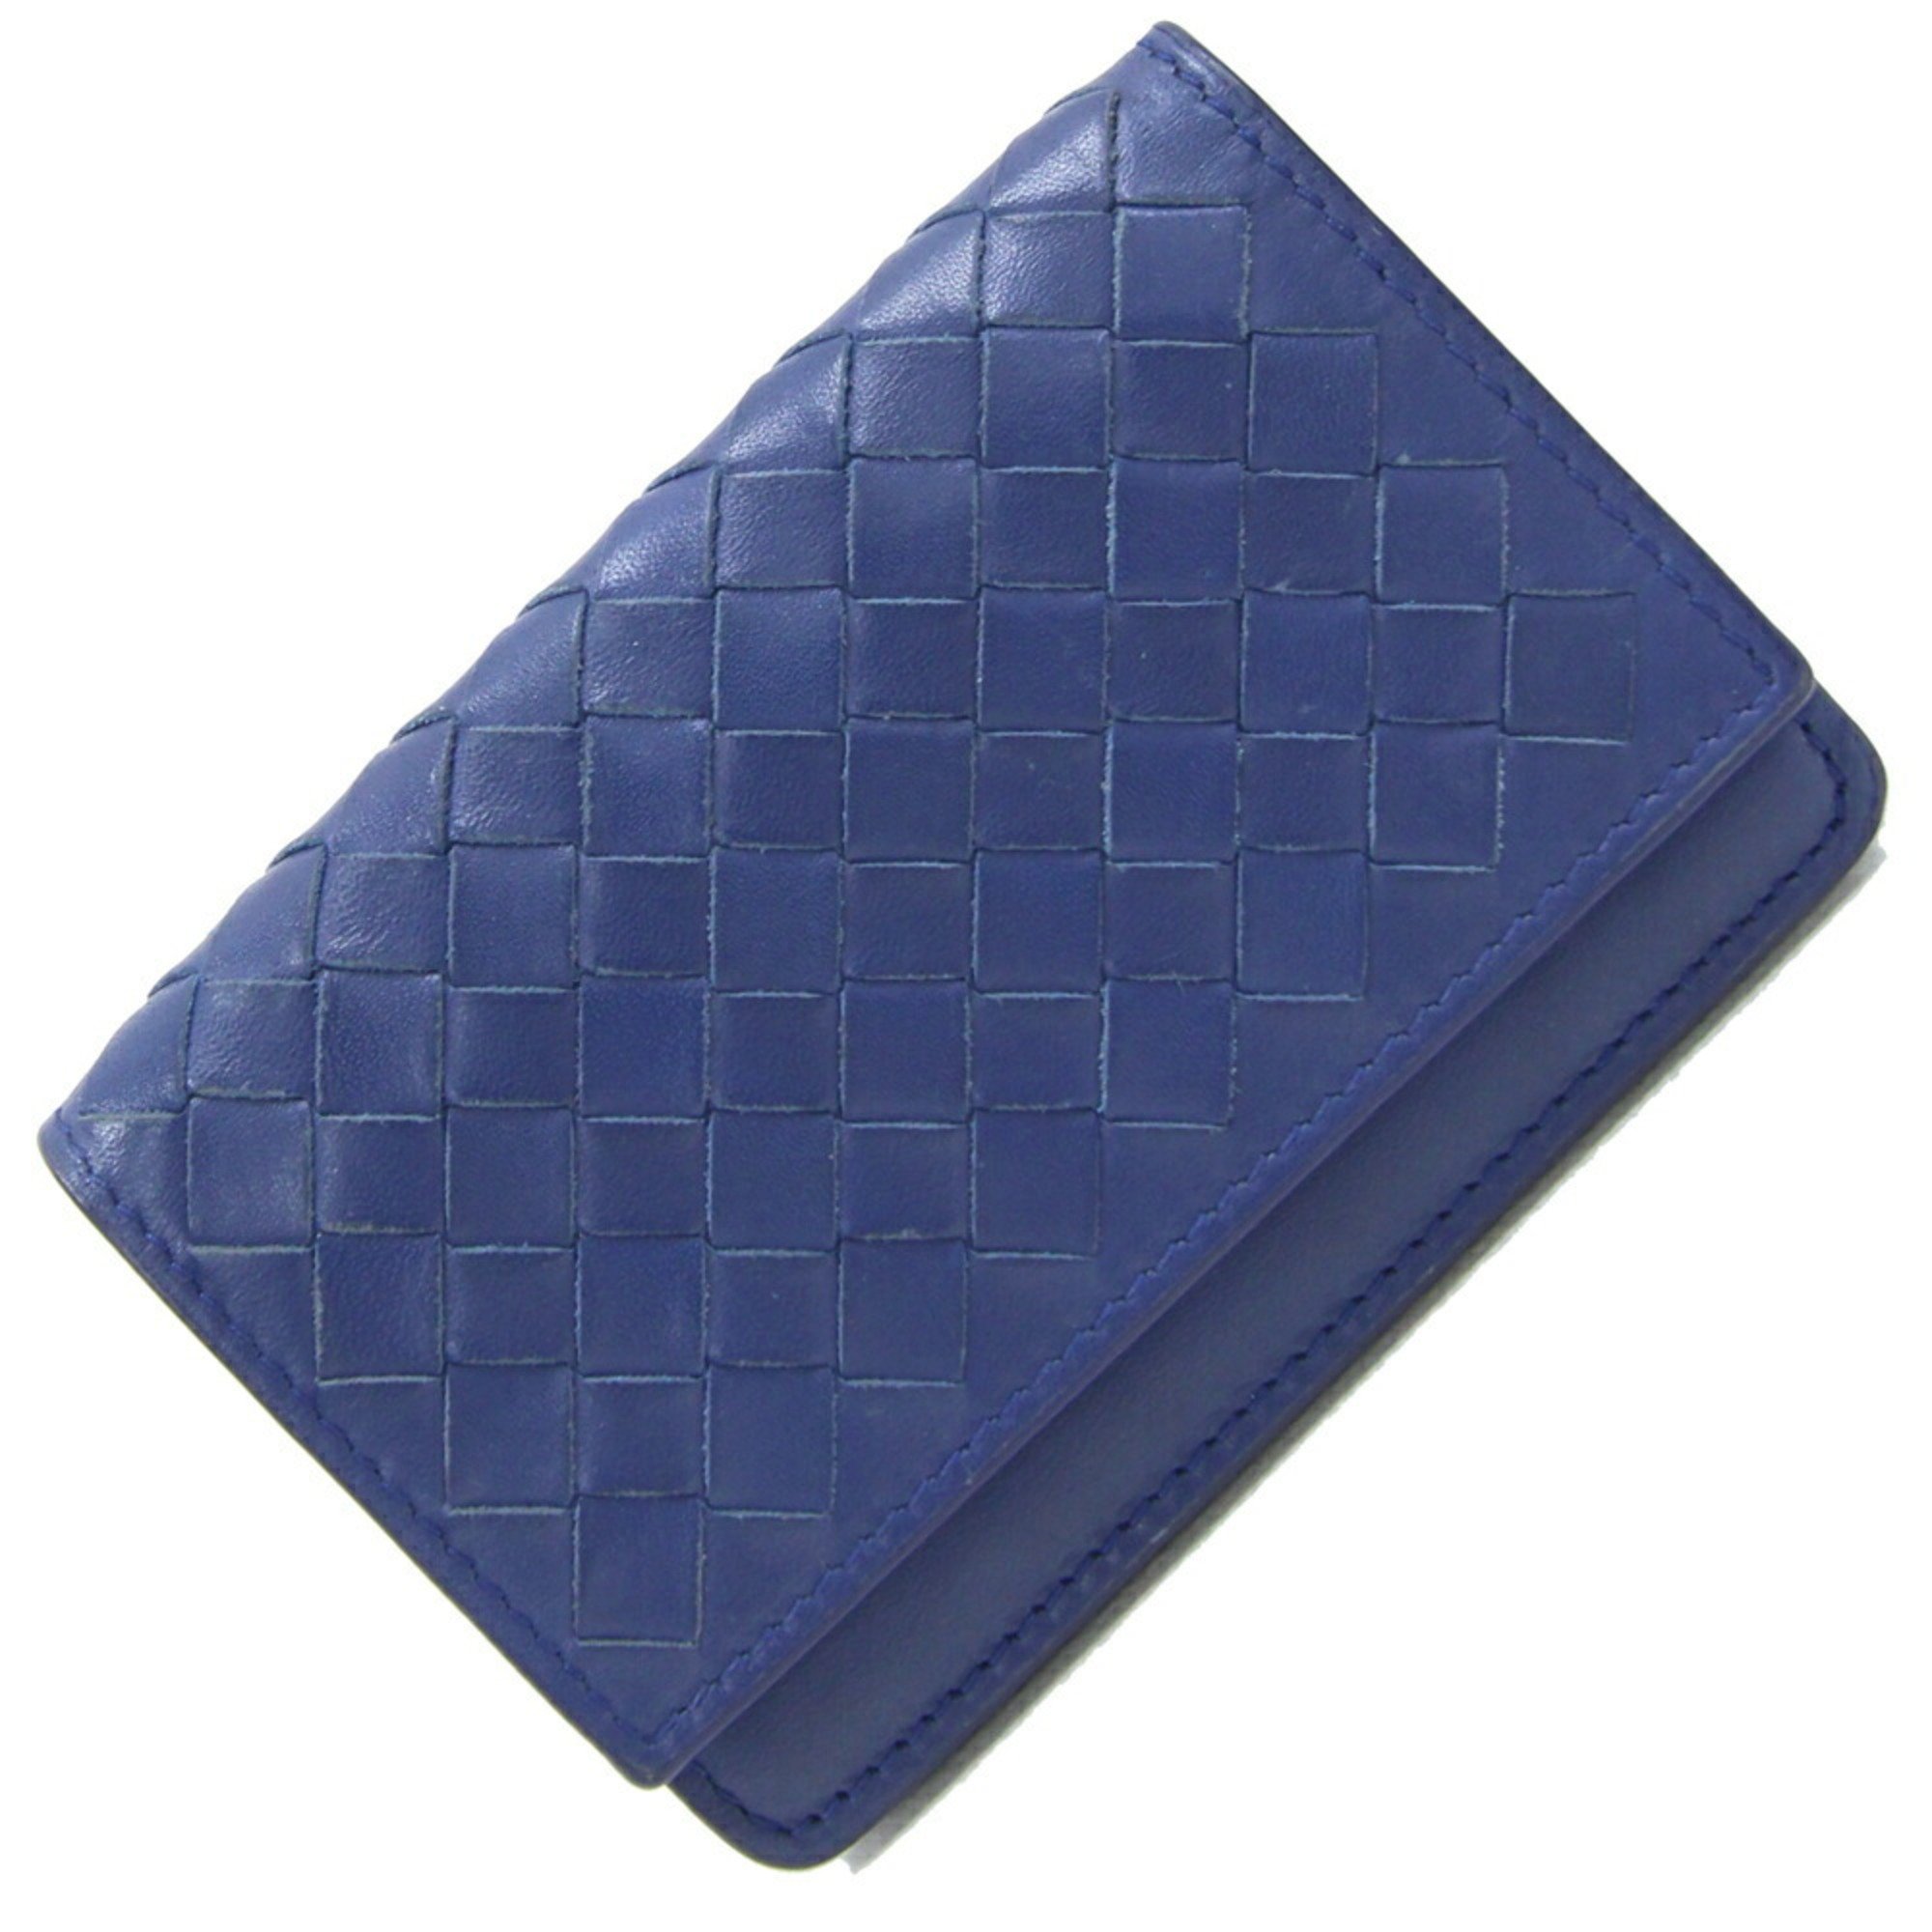 Bottega Veneta Business Card Holder Intrecciato Blue Leather Case for Men and Women BOTTEGA VENETA